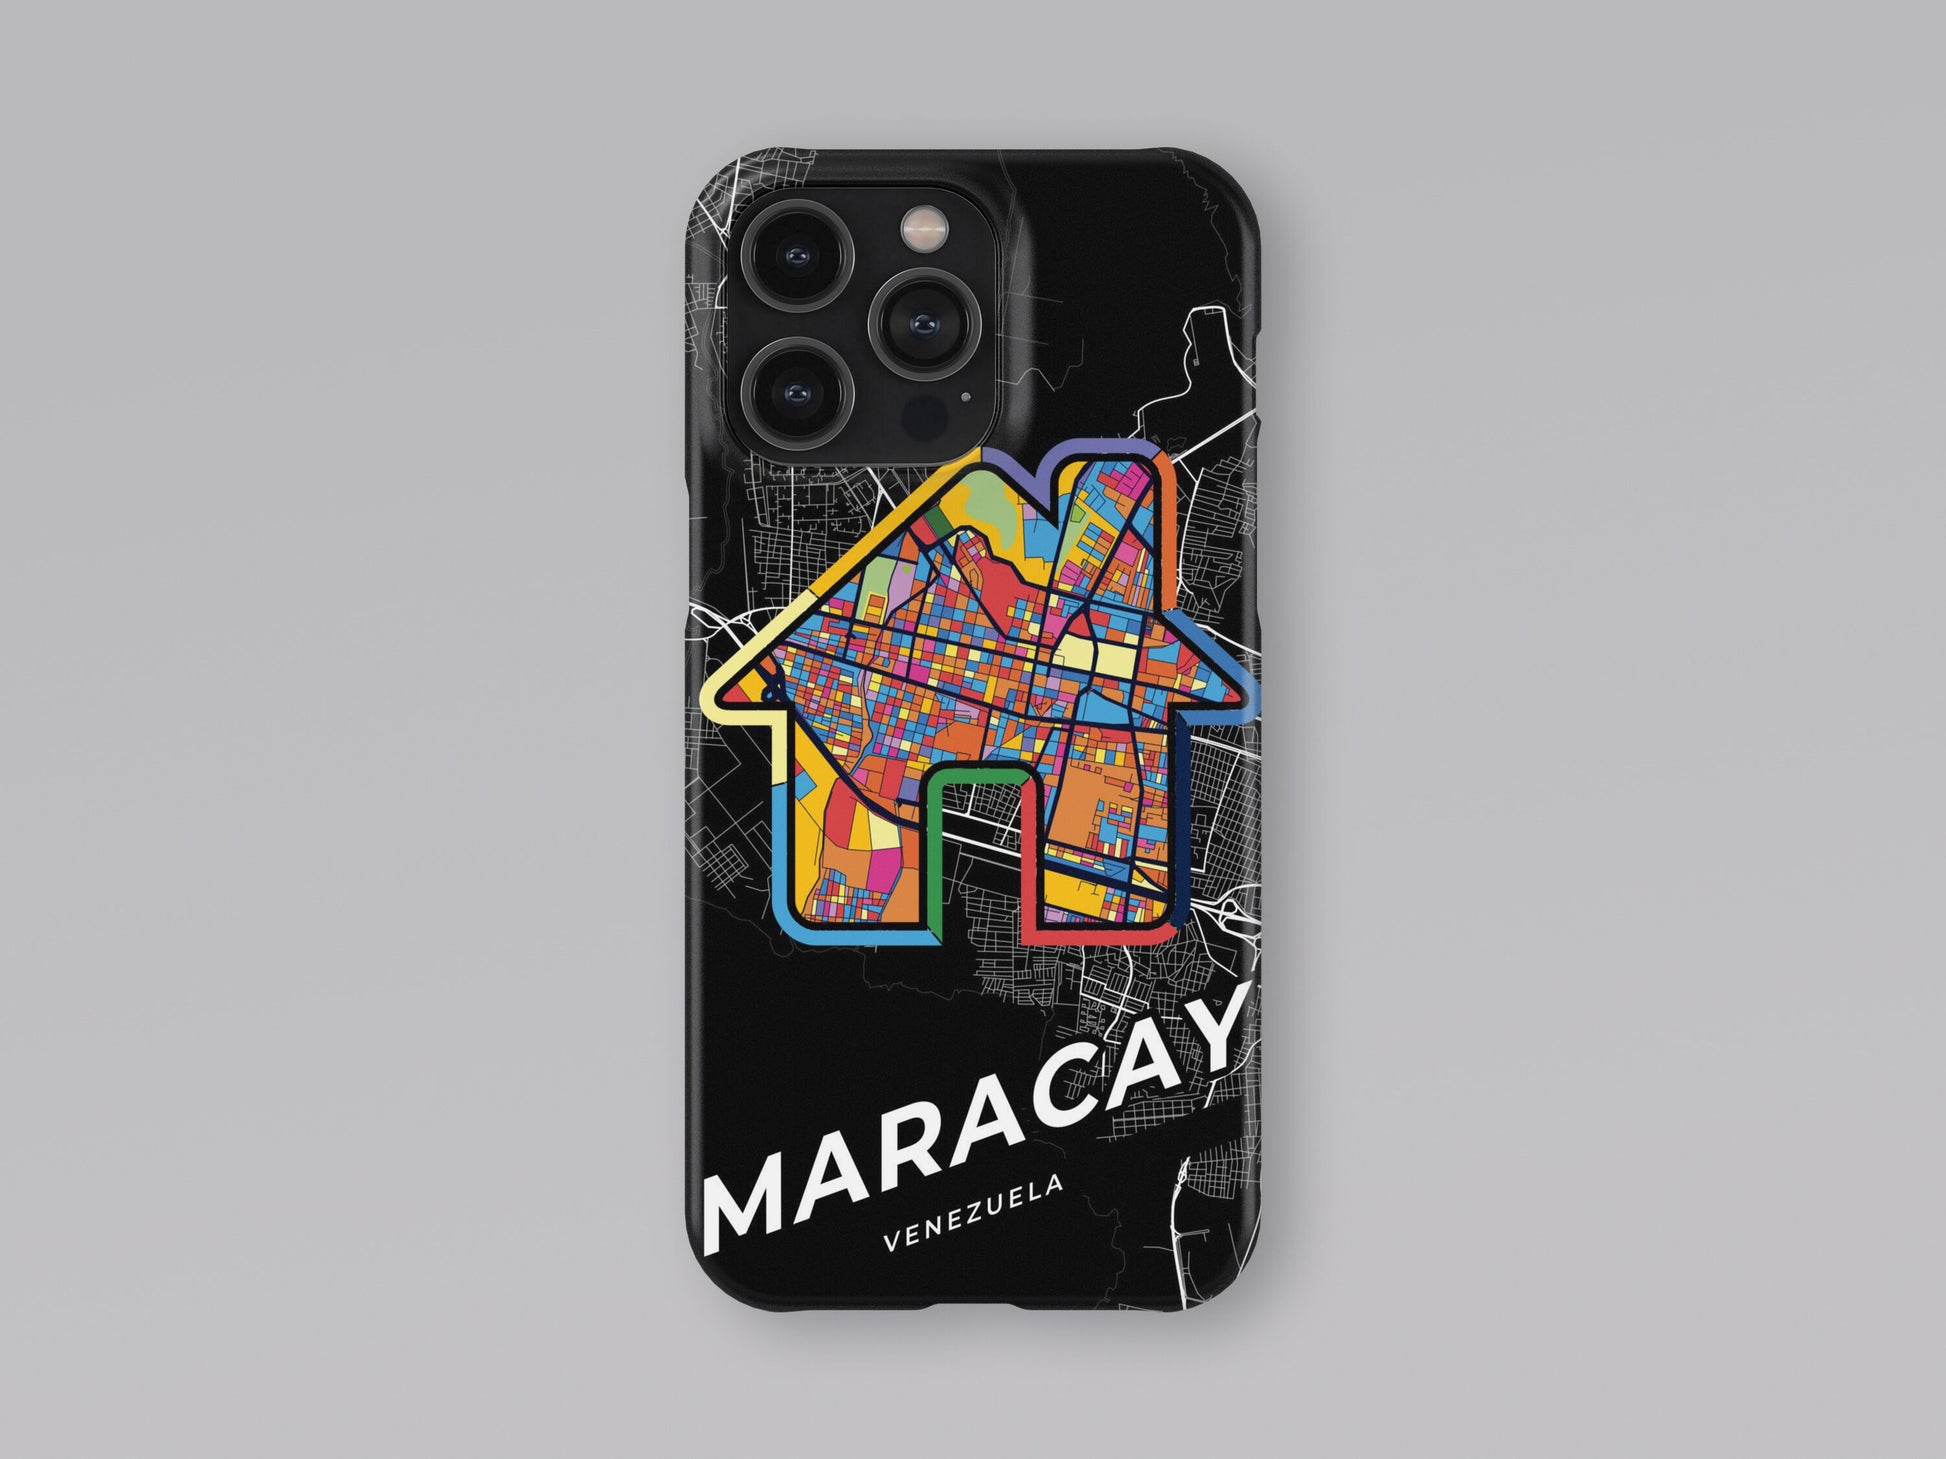 Maracay Venezuela slim phone case with colorful icon. Birthday, wedding or housewarming gift. Couple match cases. 3